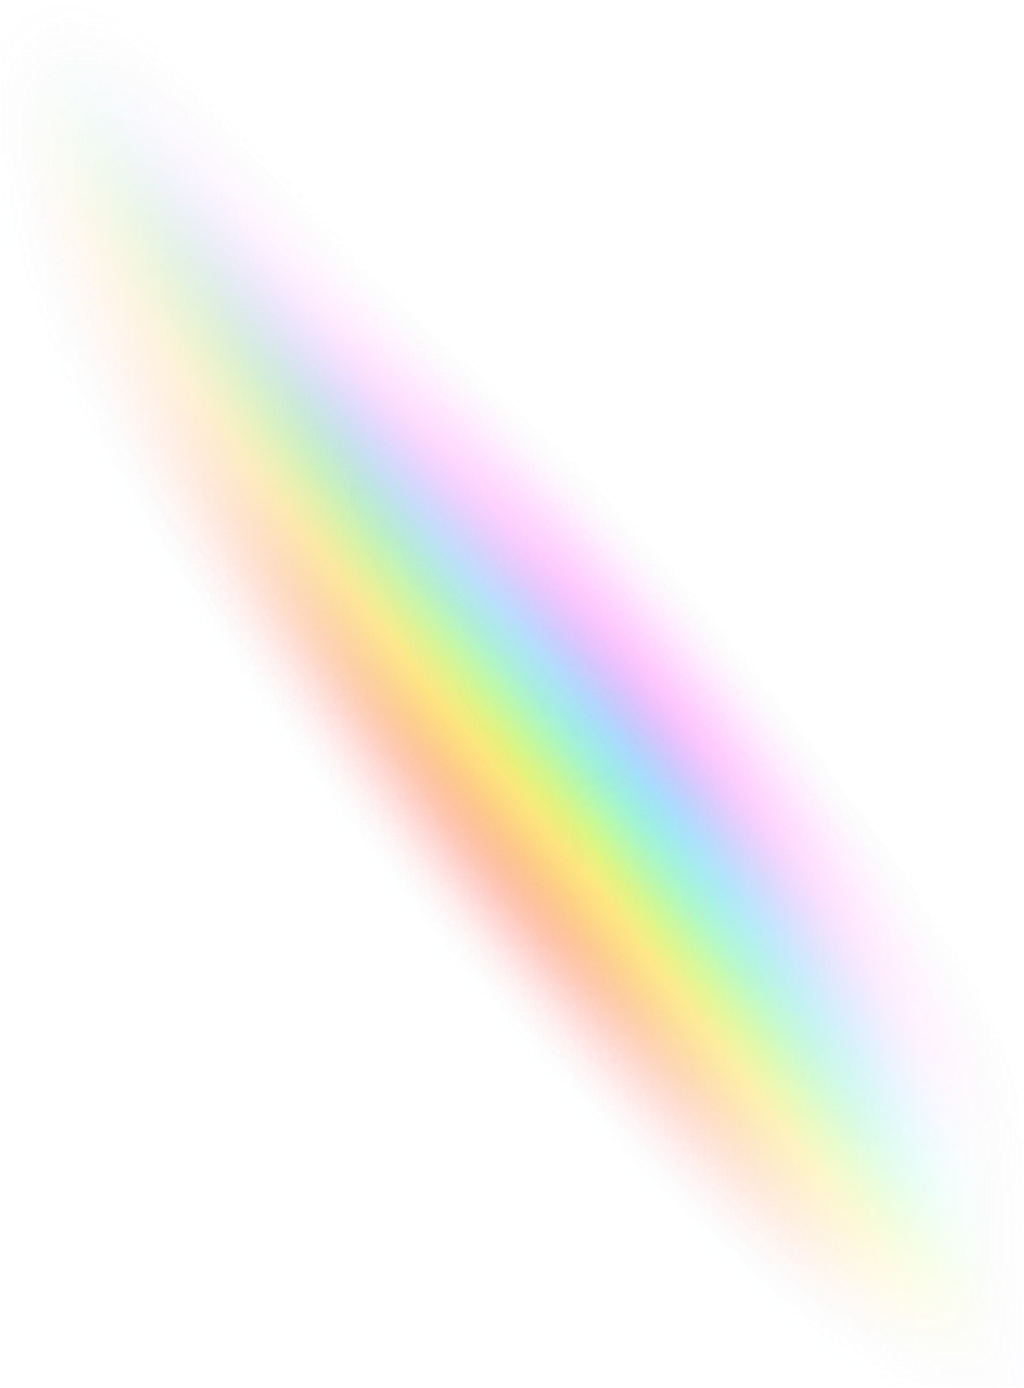 Abstract Rainbow Spectrum Artwork PNG